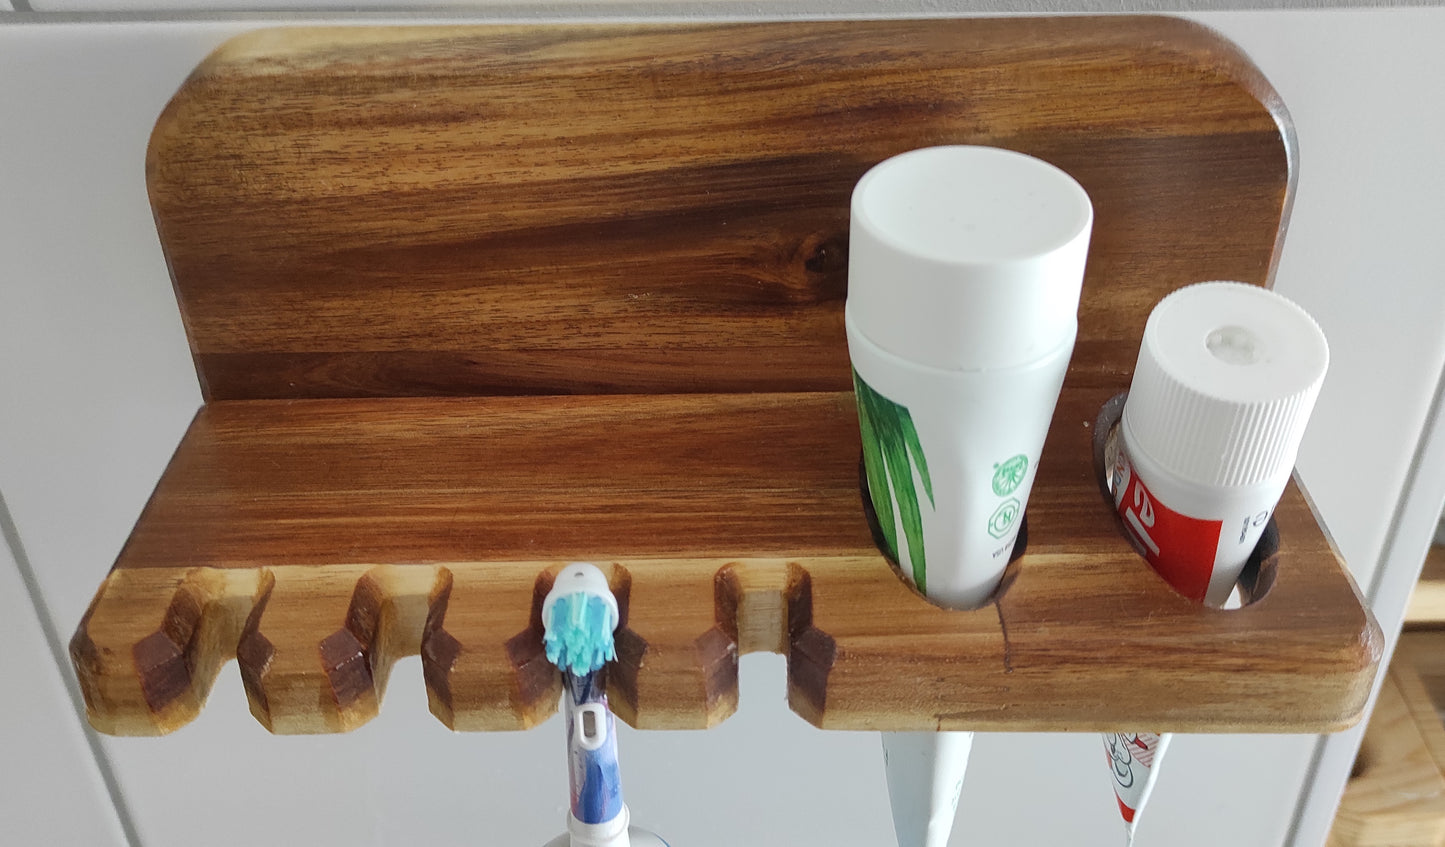 Zahnbürstenhalter aus Holz, Zahnpastehalter